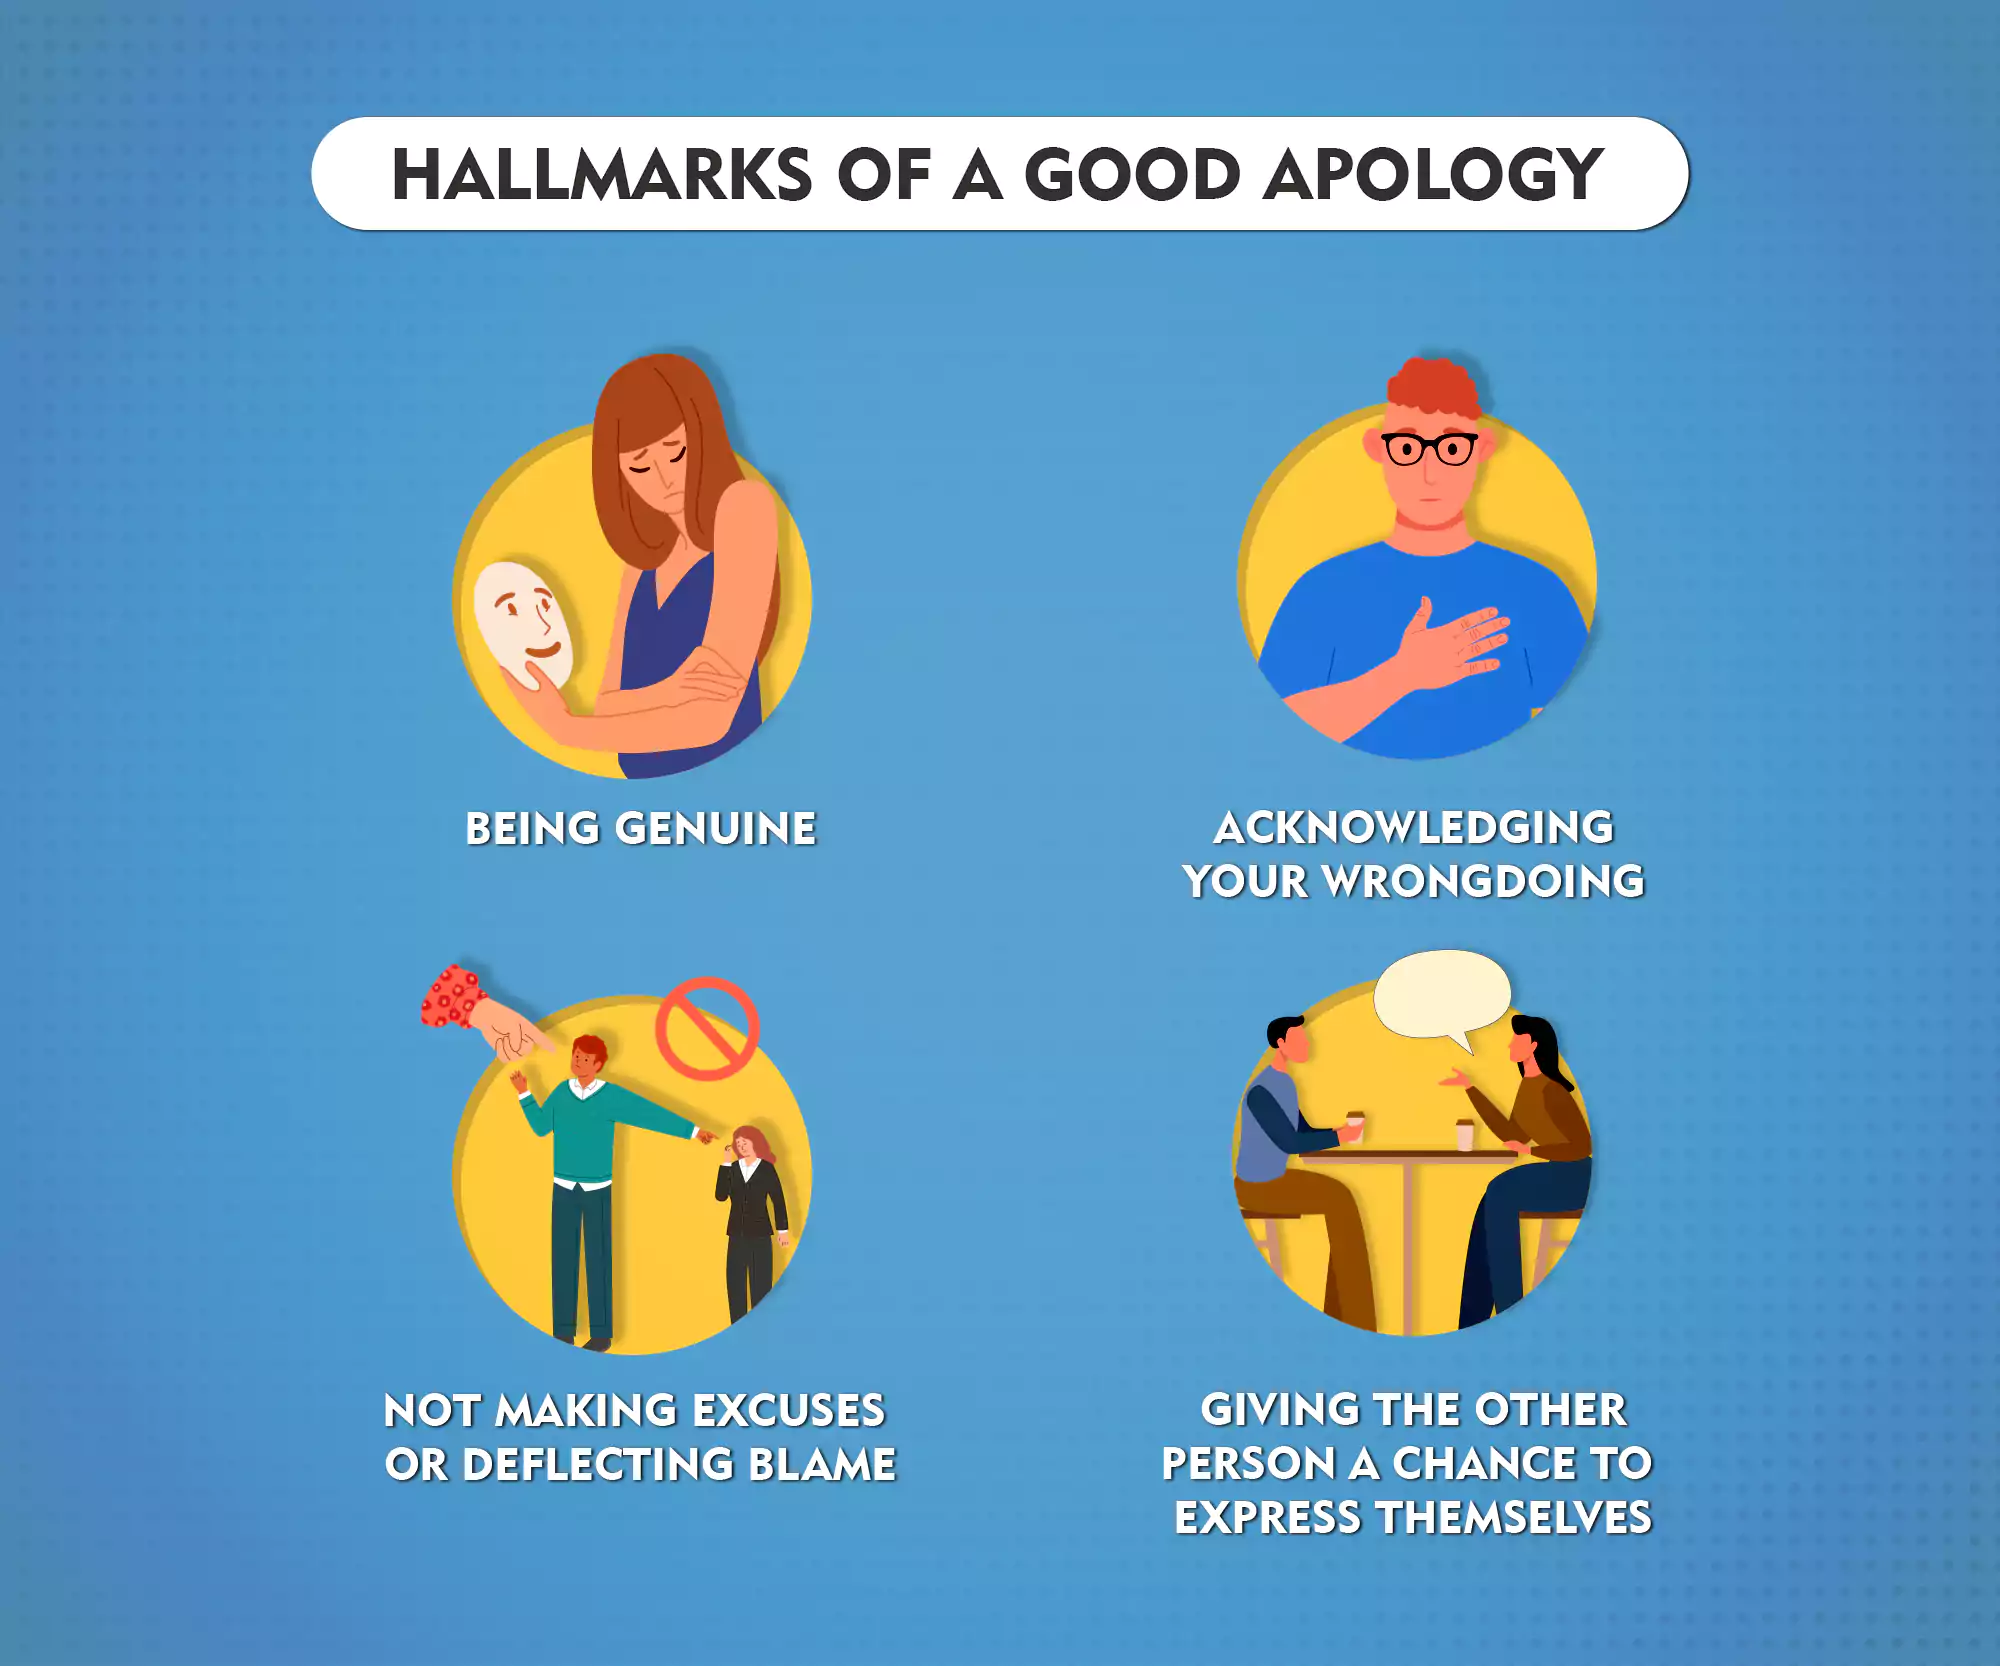 Hallmarks of a good apology